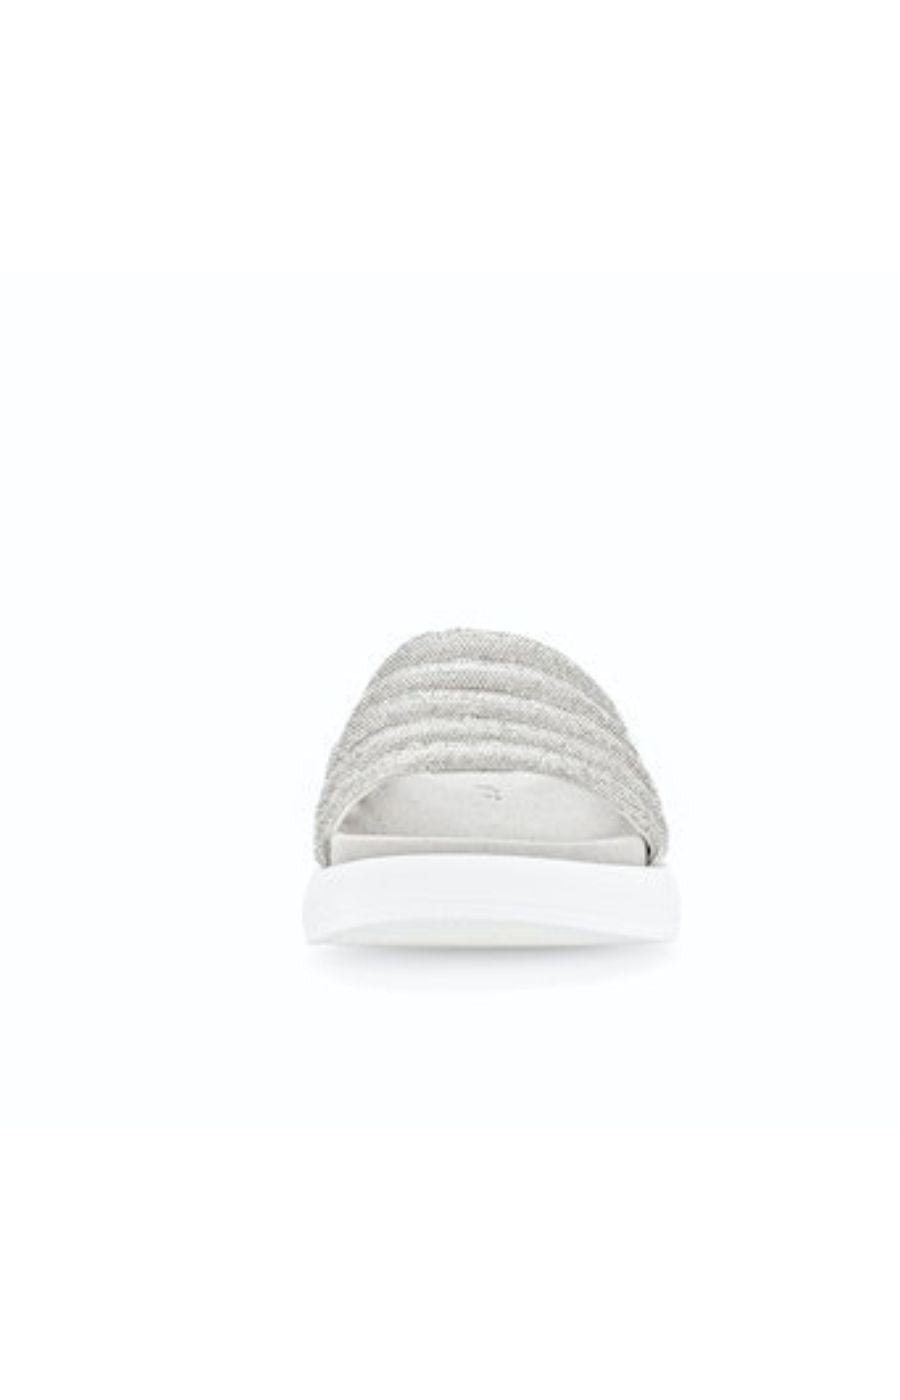 Gabor Sparkle Sandal in Silver